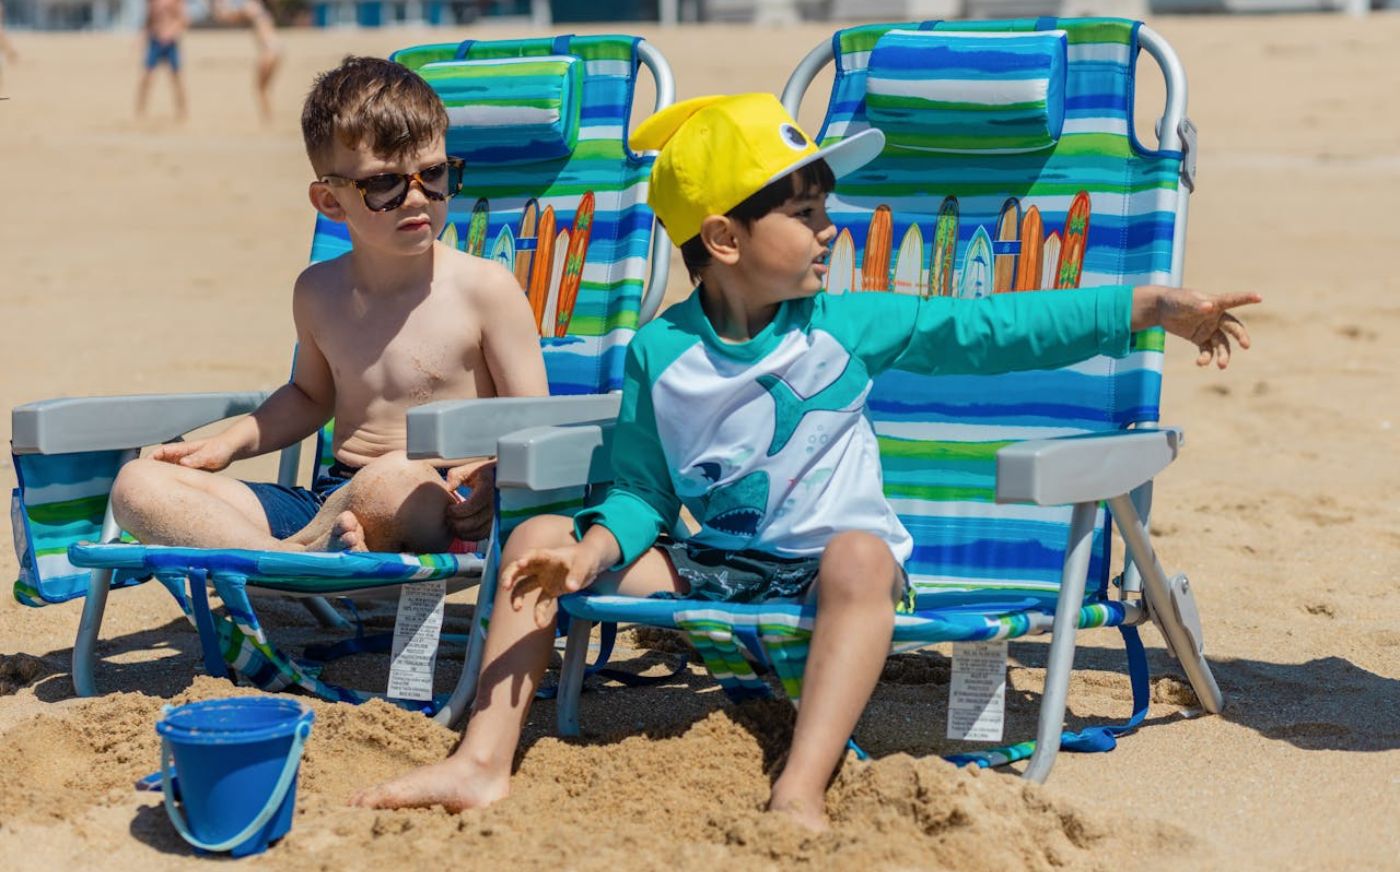 Two boys sitting on beach chairs on a sandy beach